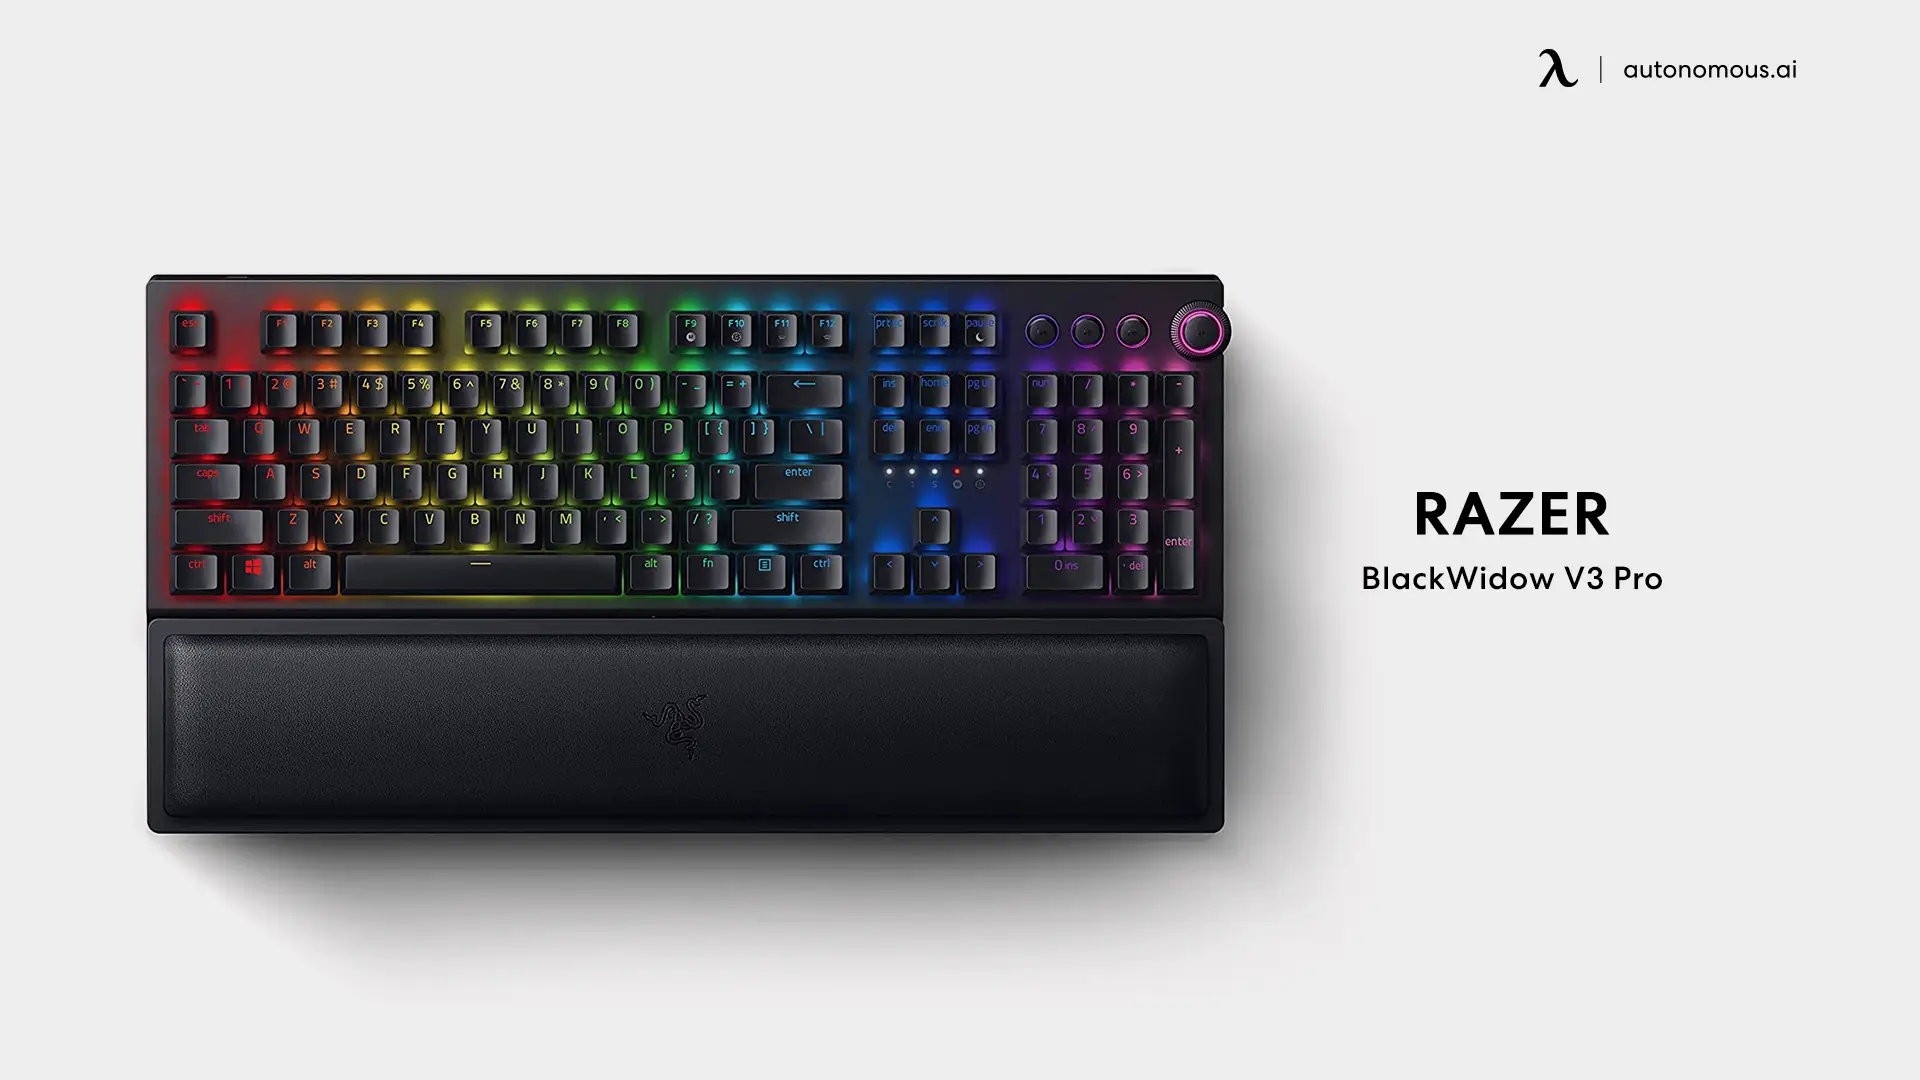 Razer BlackWidow V3 Pro small gaming keyboard